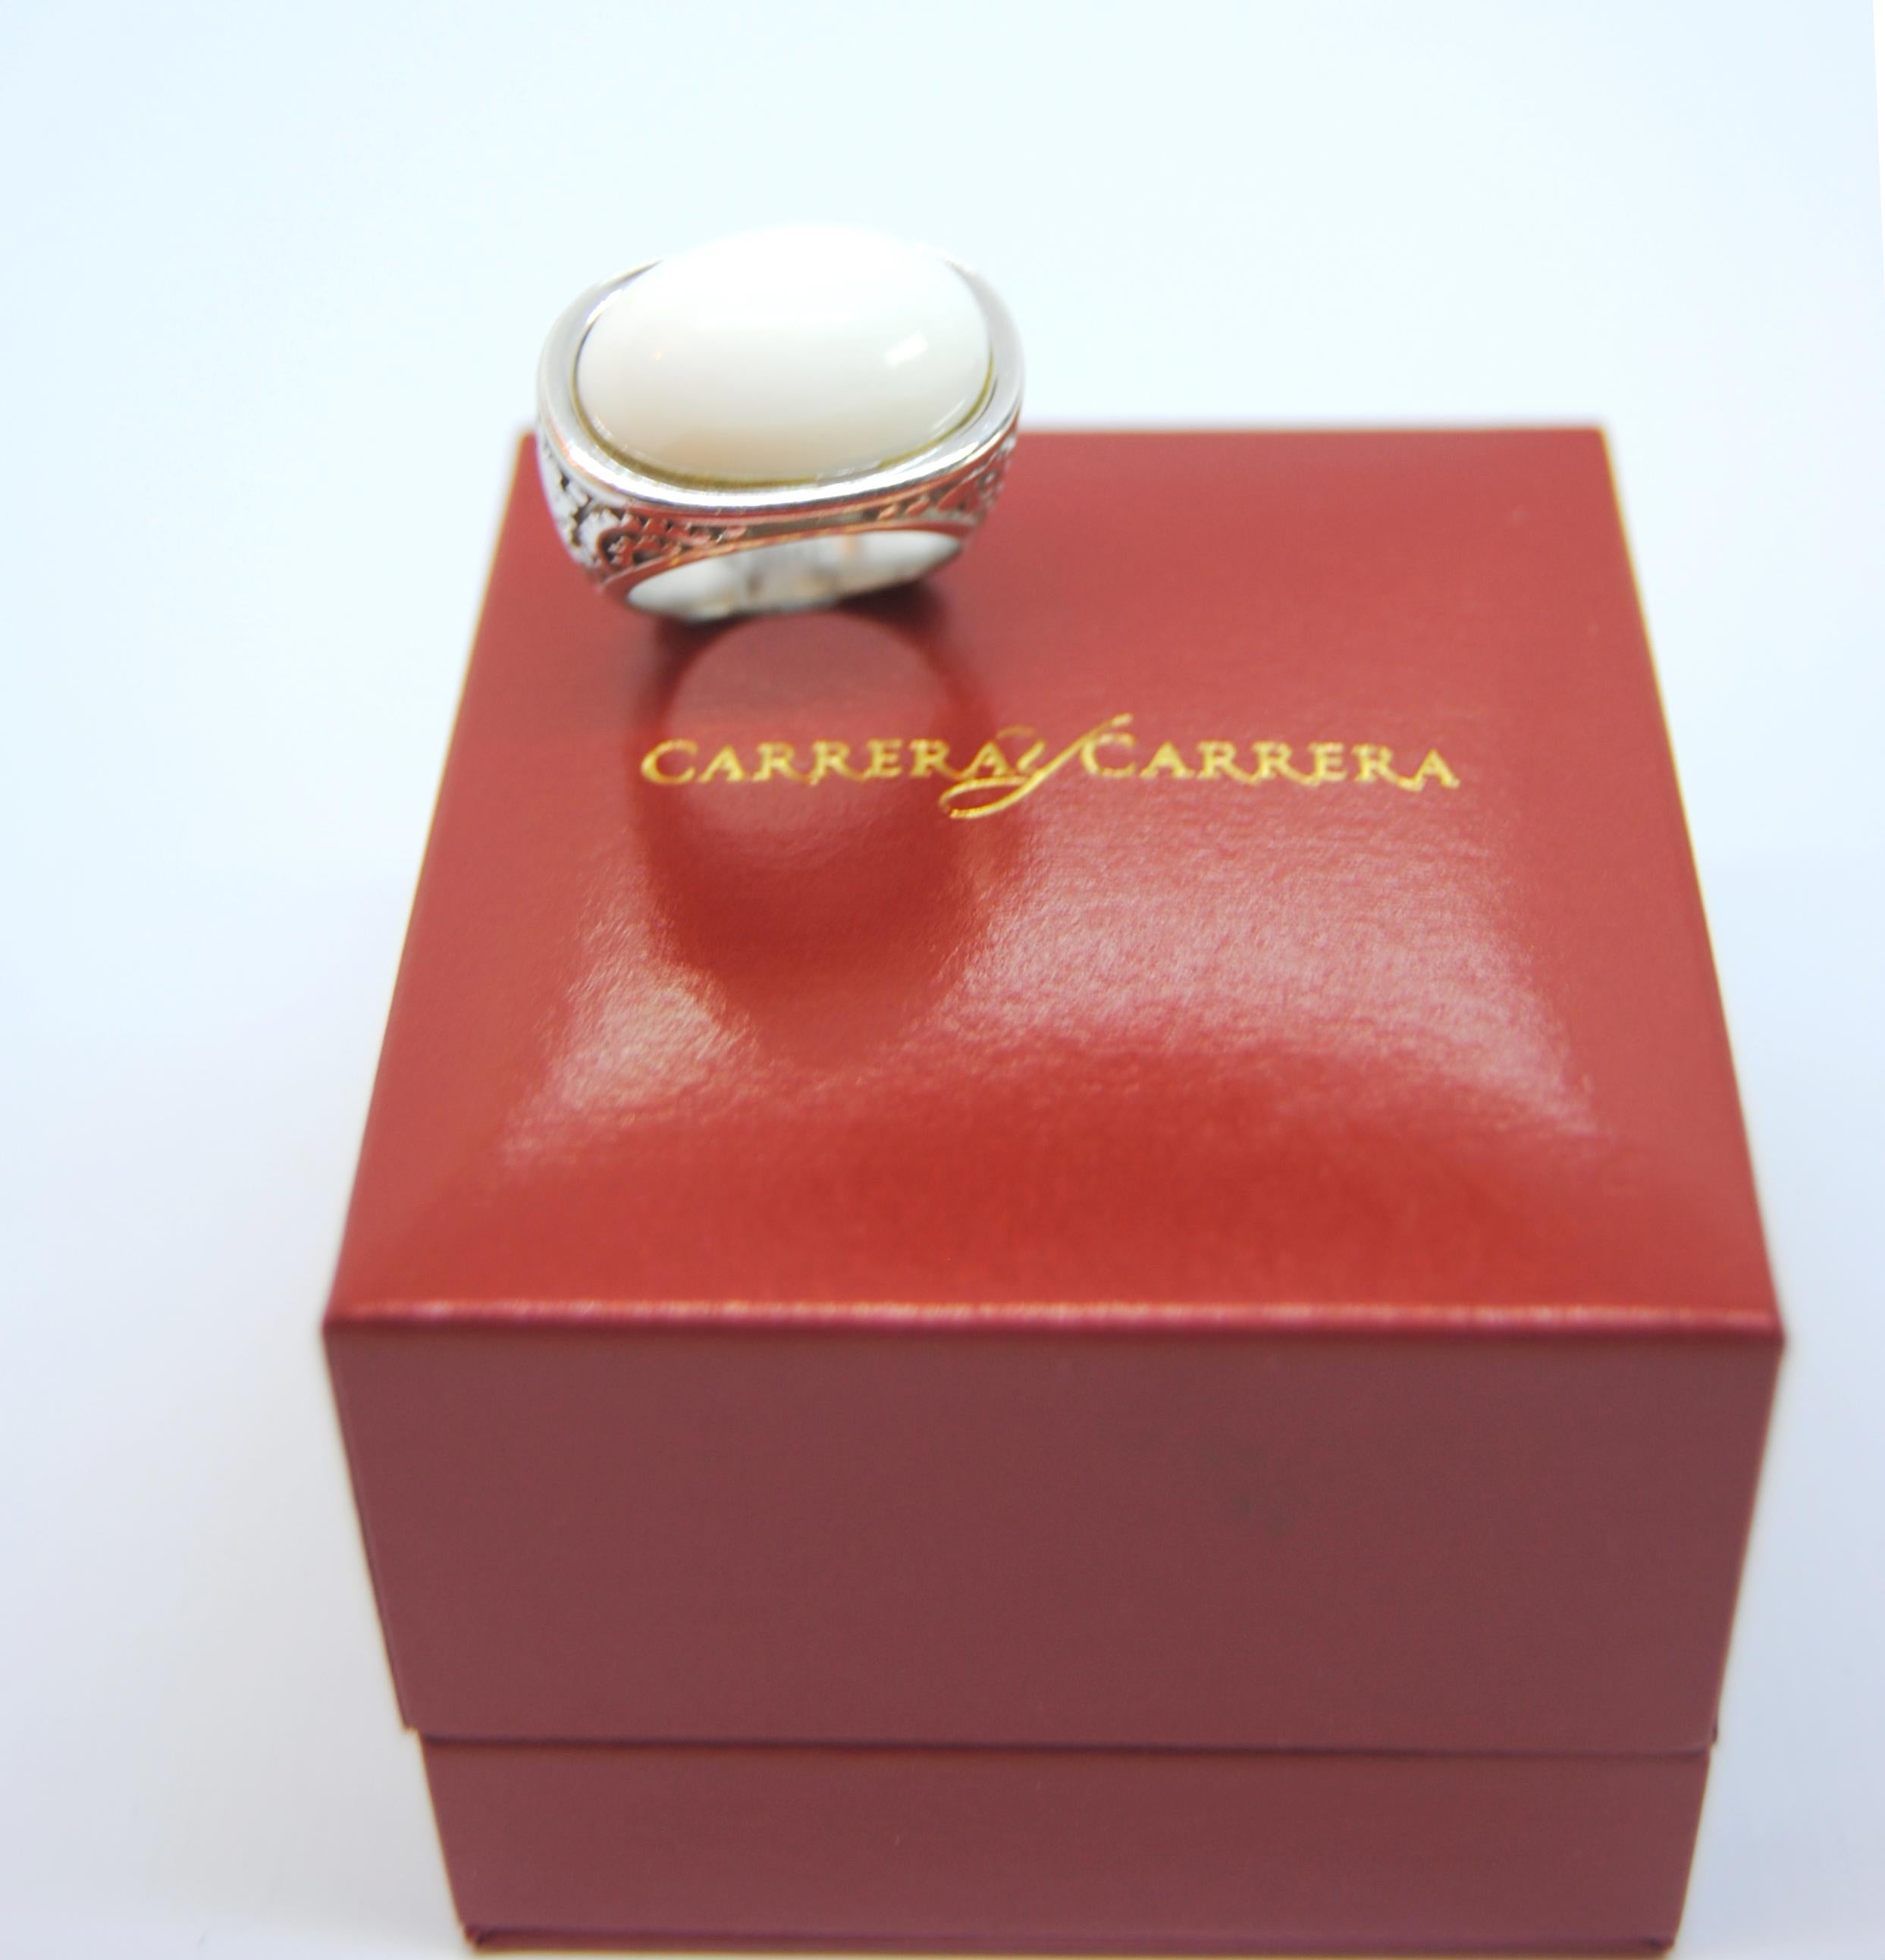 Carrera y Carrera's Aqua Collection 18 Karat White Gold Ring Onyx Center 2